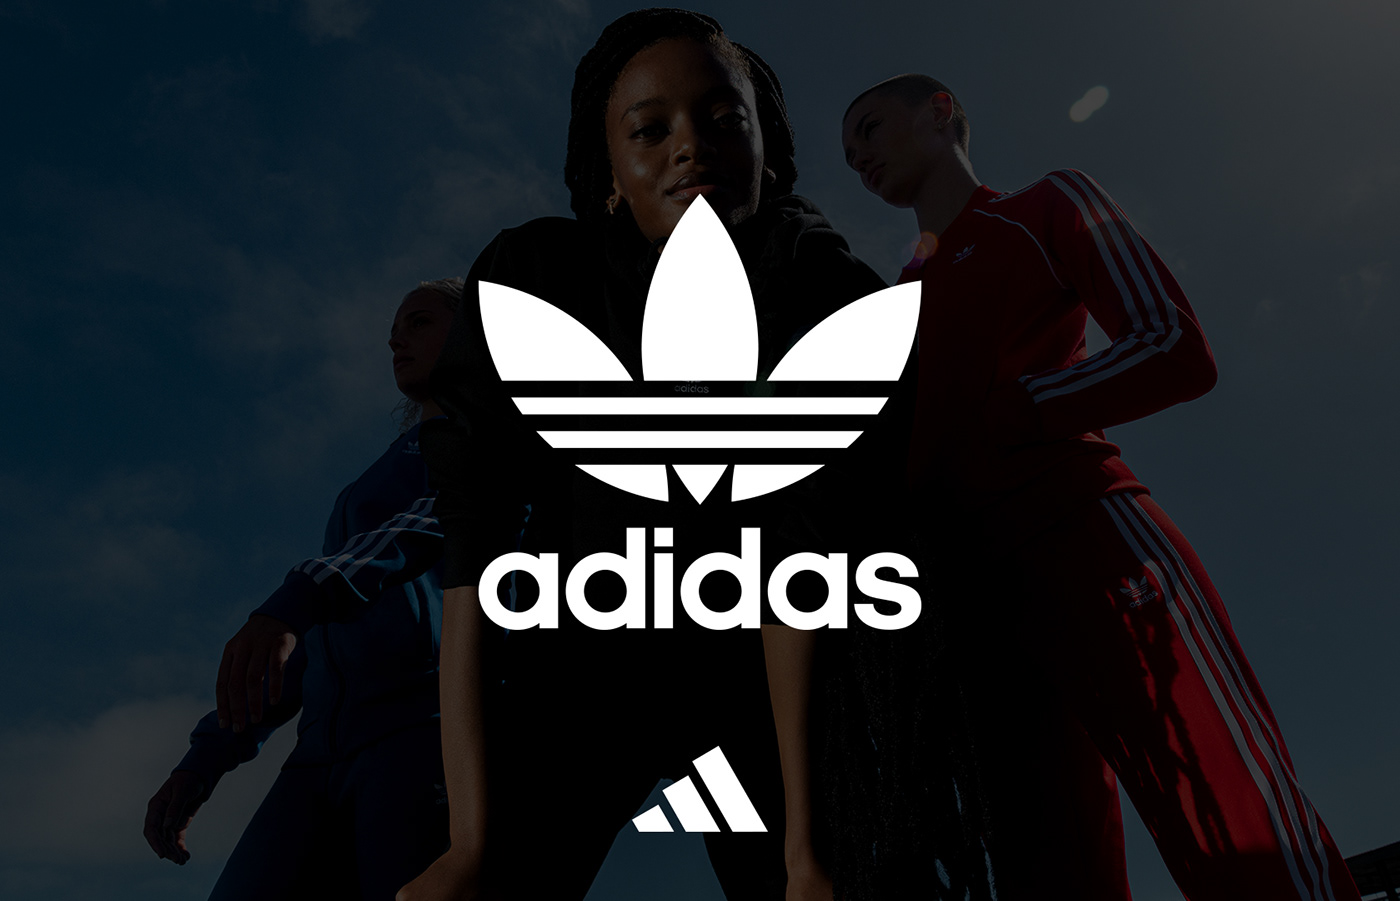 adidas adidas originals adidasoriginals Fashion  footwear sneakers shoes Nike Sports Design print design 